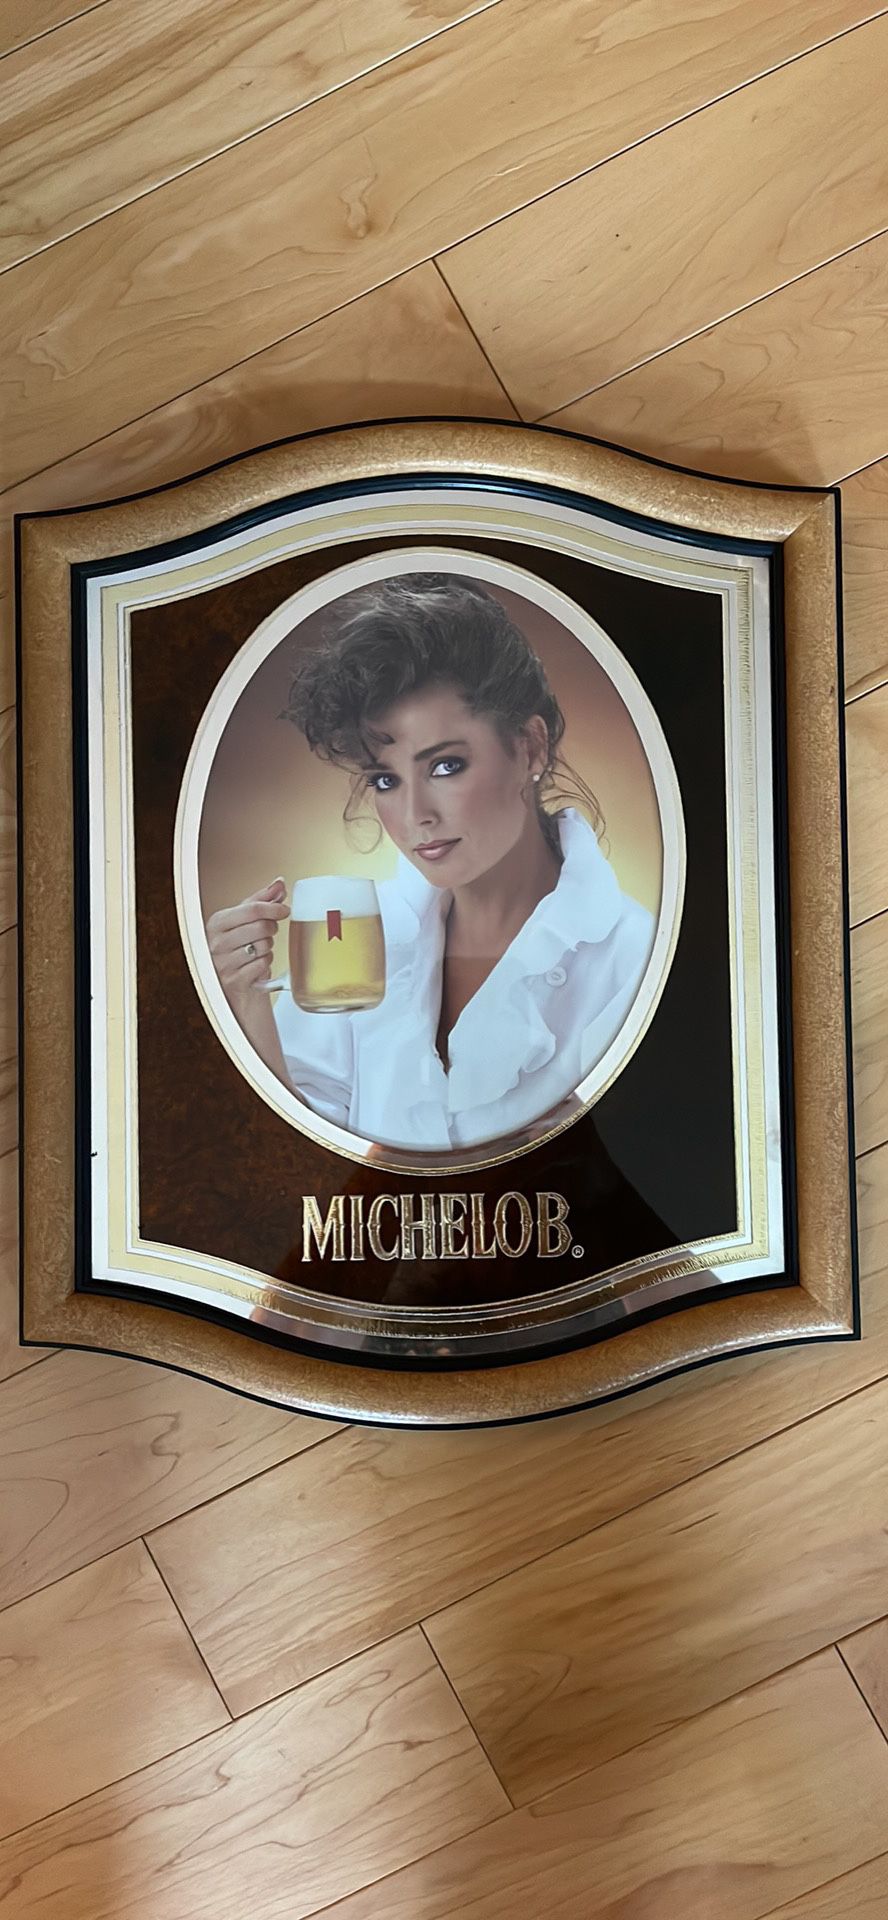 Michelob vintage framed mirrored beer sign